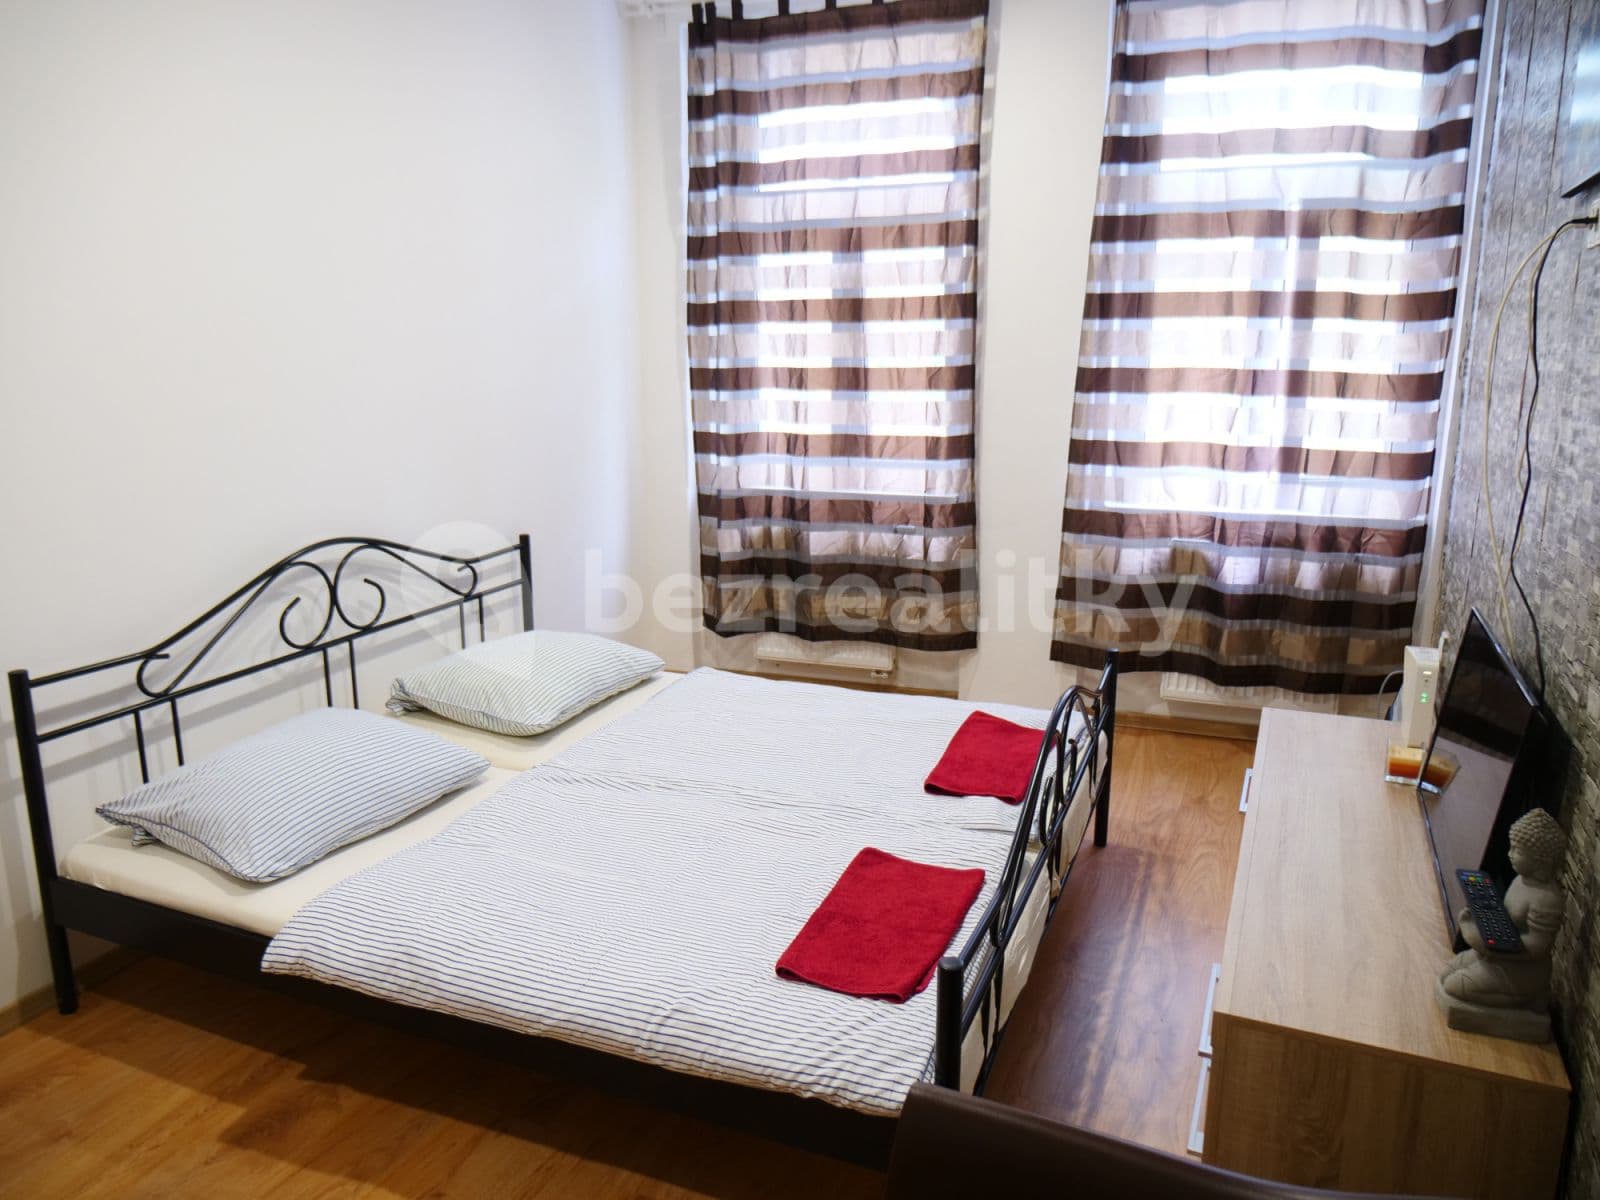 1 bedroom flat to rent, 47 m², Ruská, Teplice, Ústecký Region